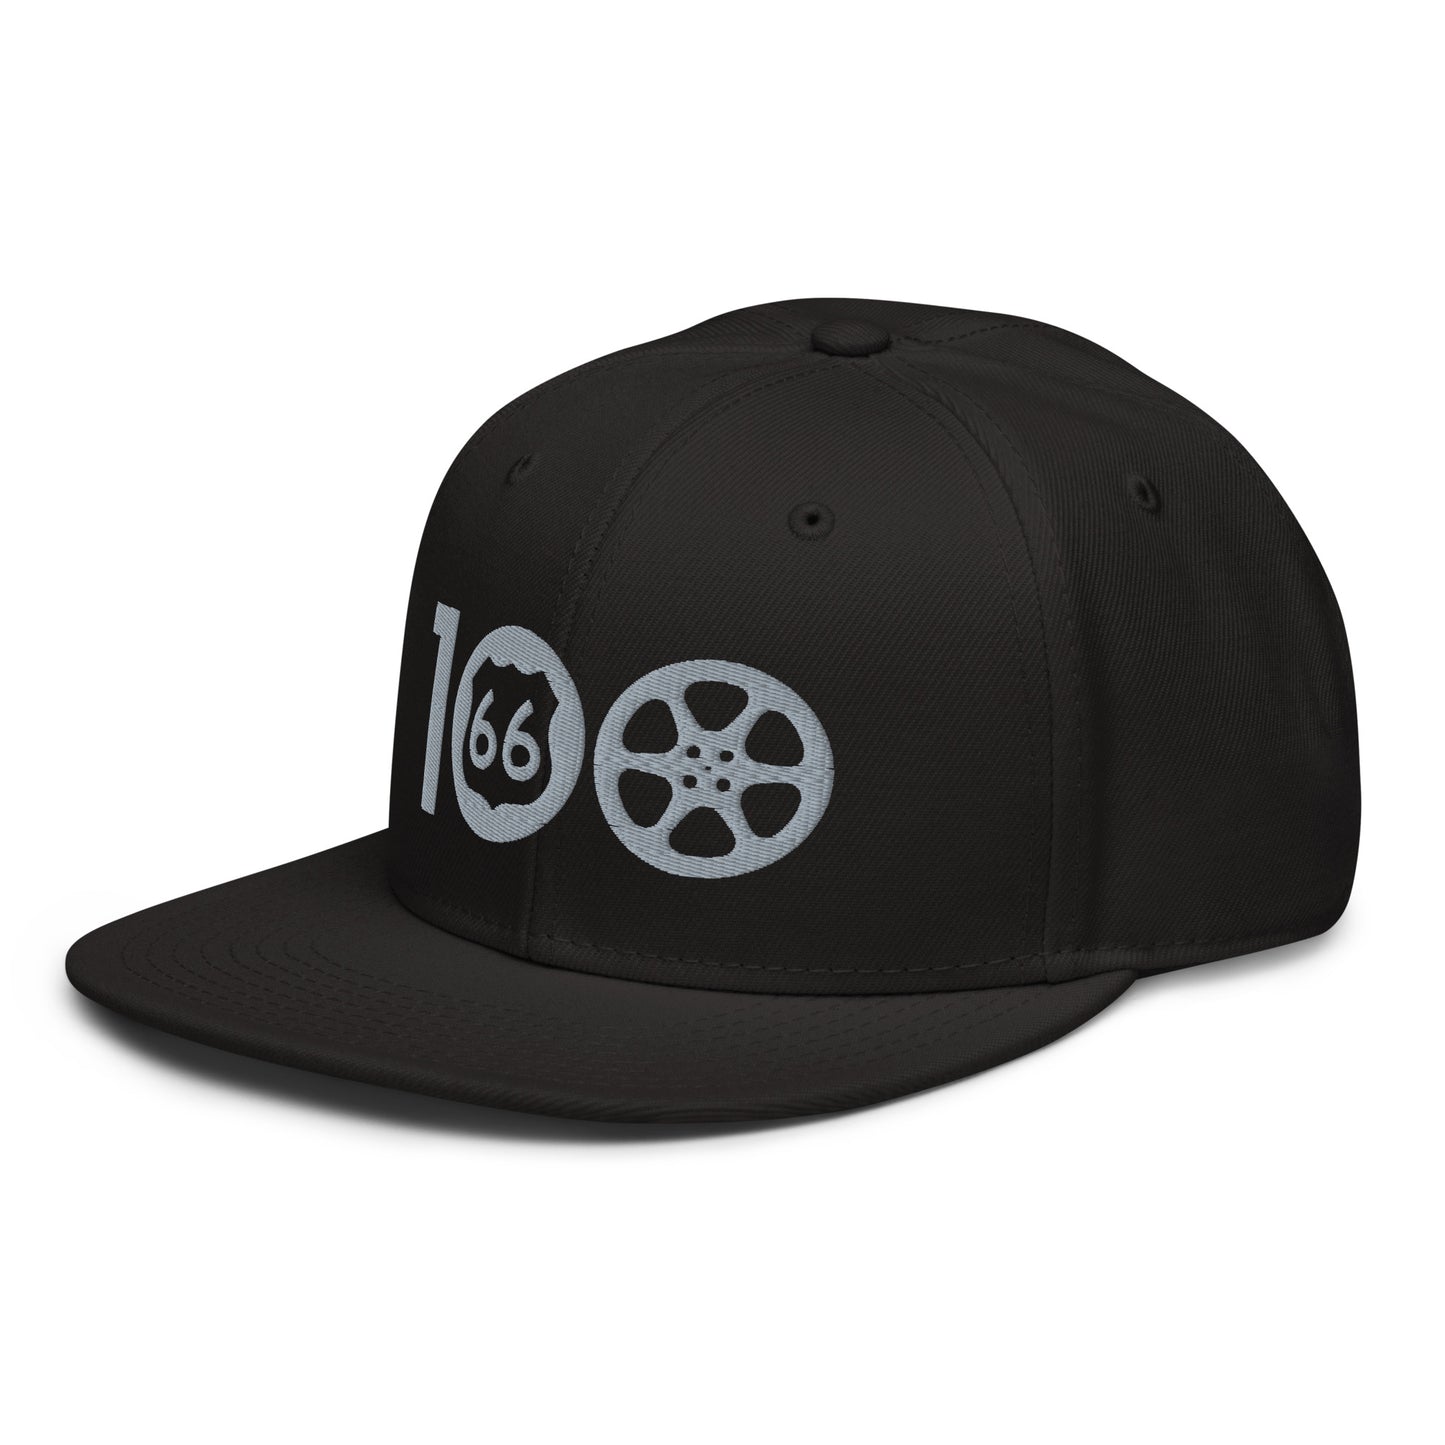 Route 66 Film Crew Hat - Minimalist Silver on Black